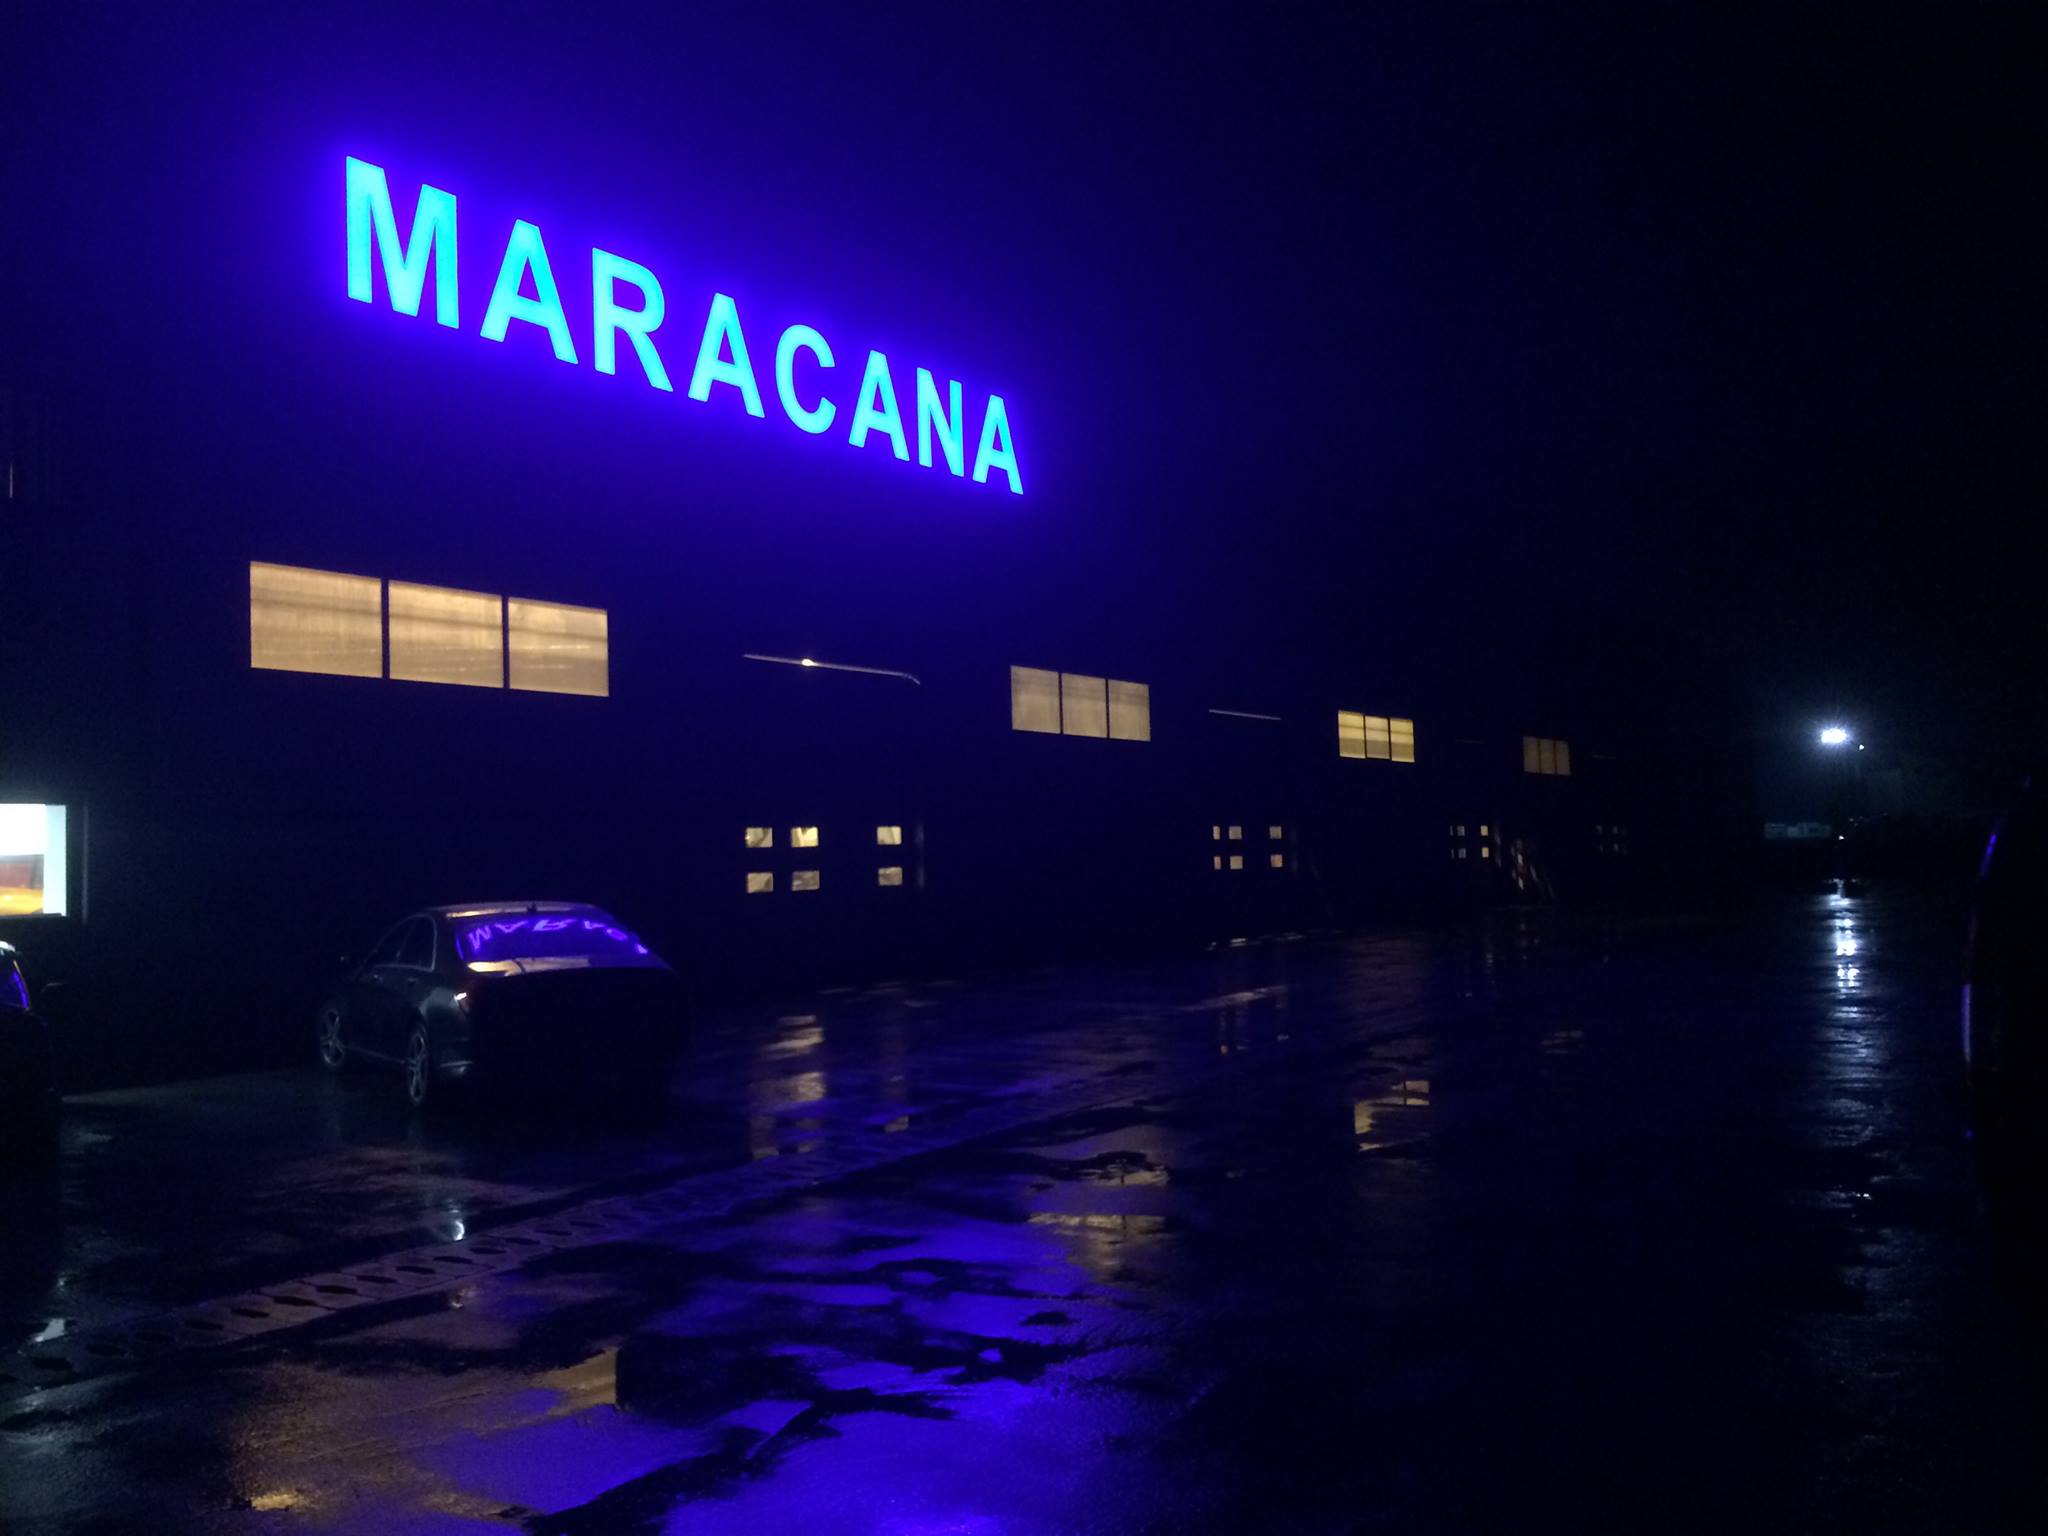 maracana - Welcome to Maracana!